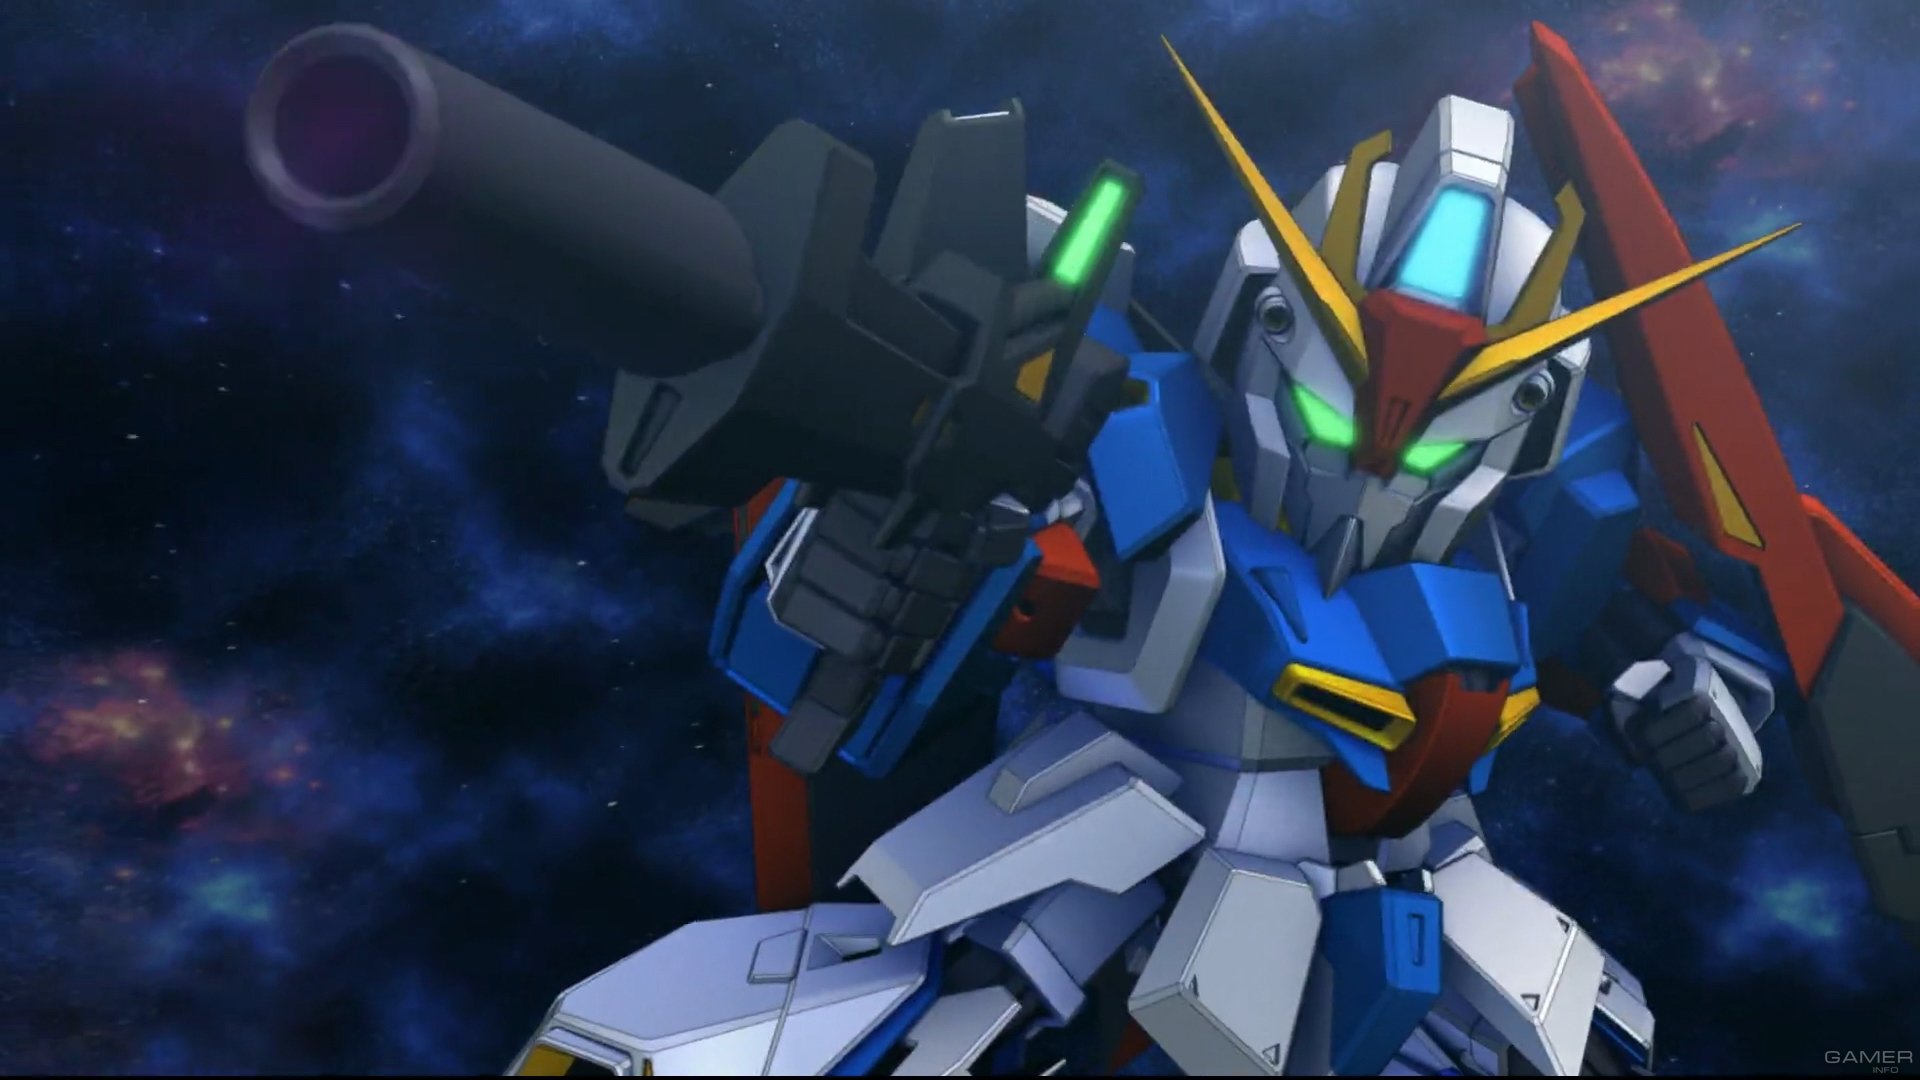 SD Gundam G Generation: Genesis (2016 video game)